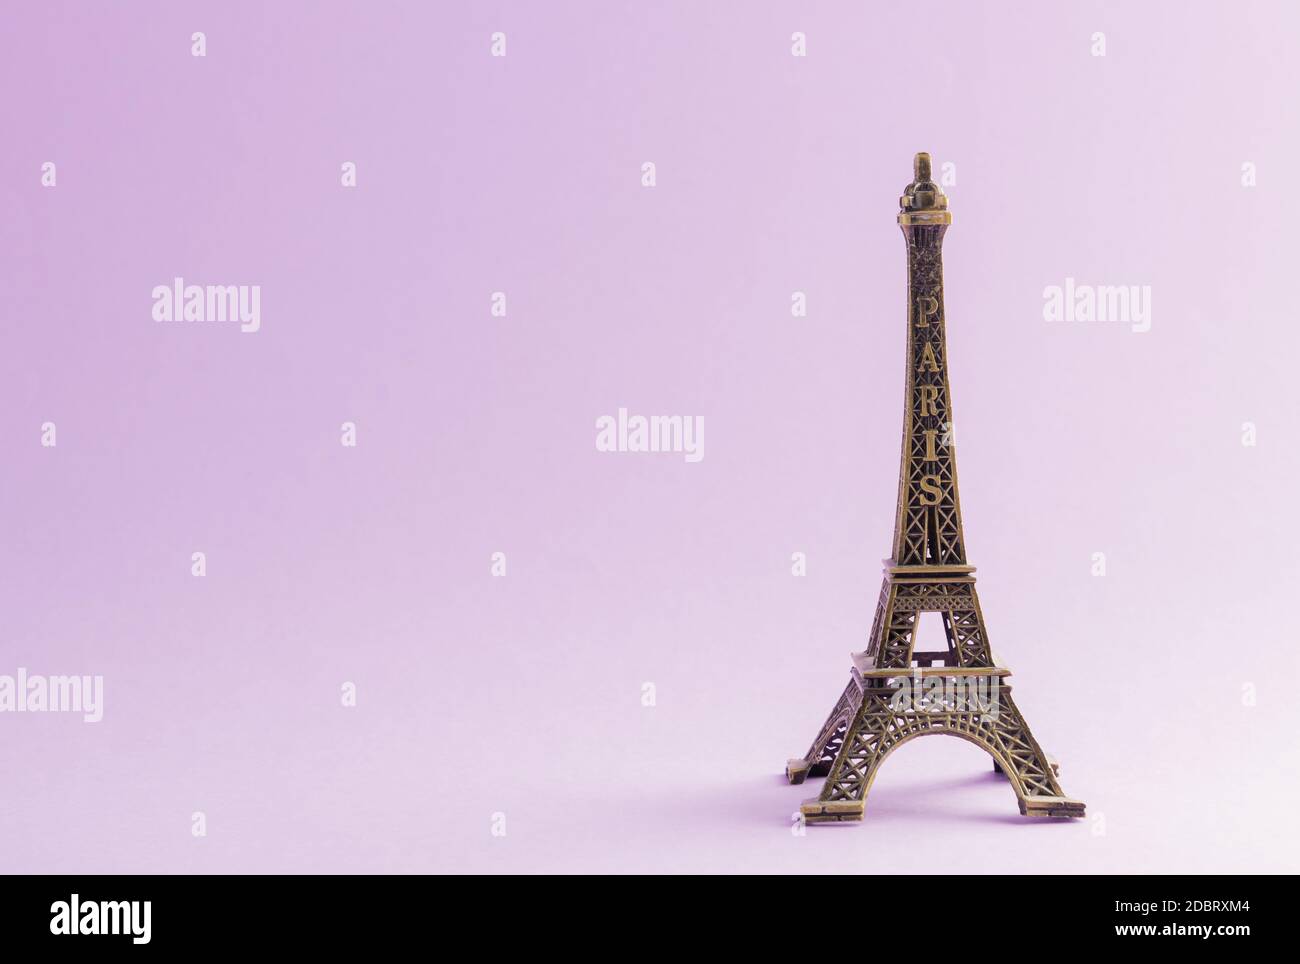 Paris France monument Eiffel tower famous landmark model, studio shot isolated on purple background Stock Photo